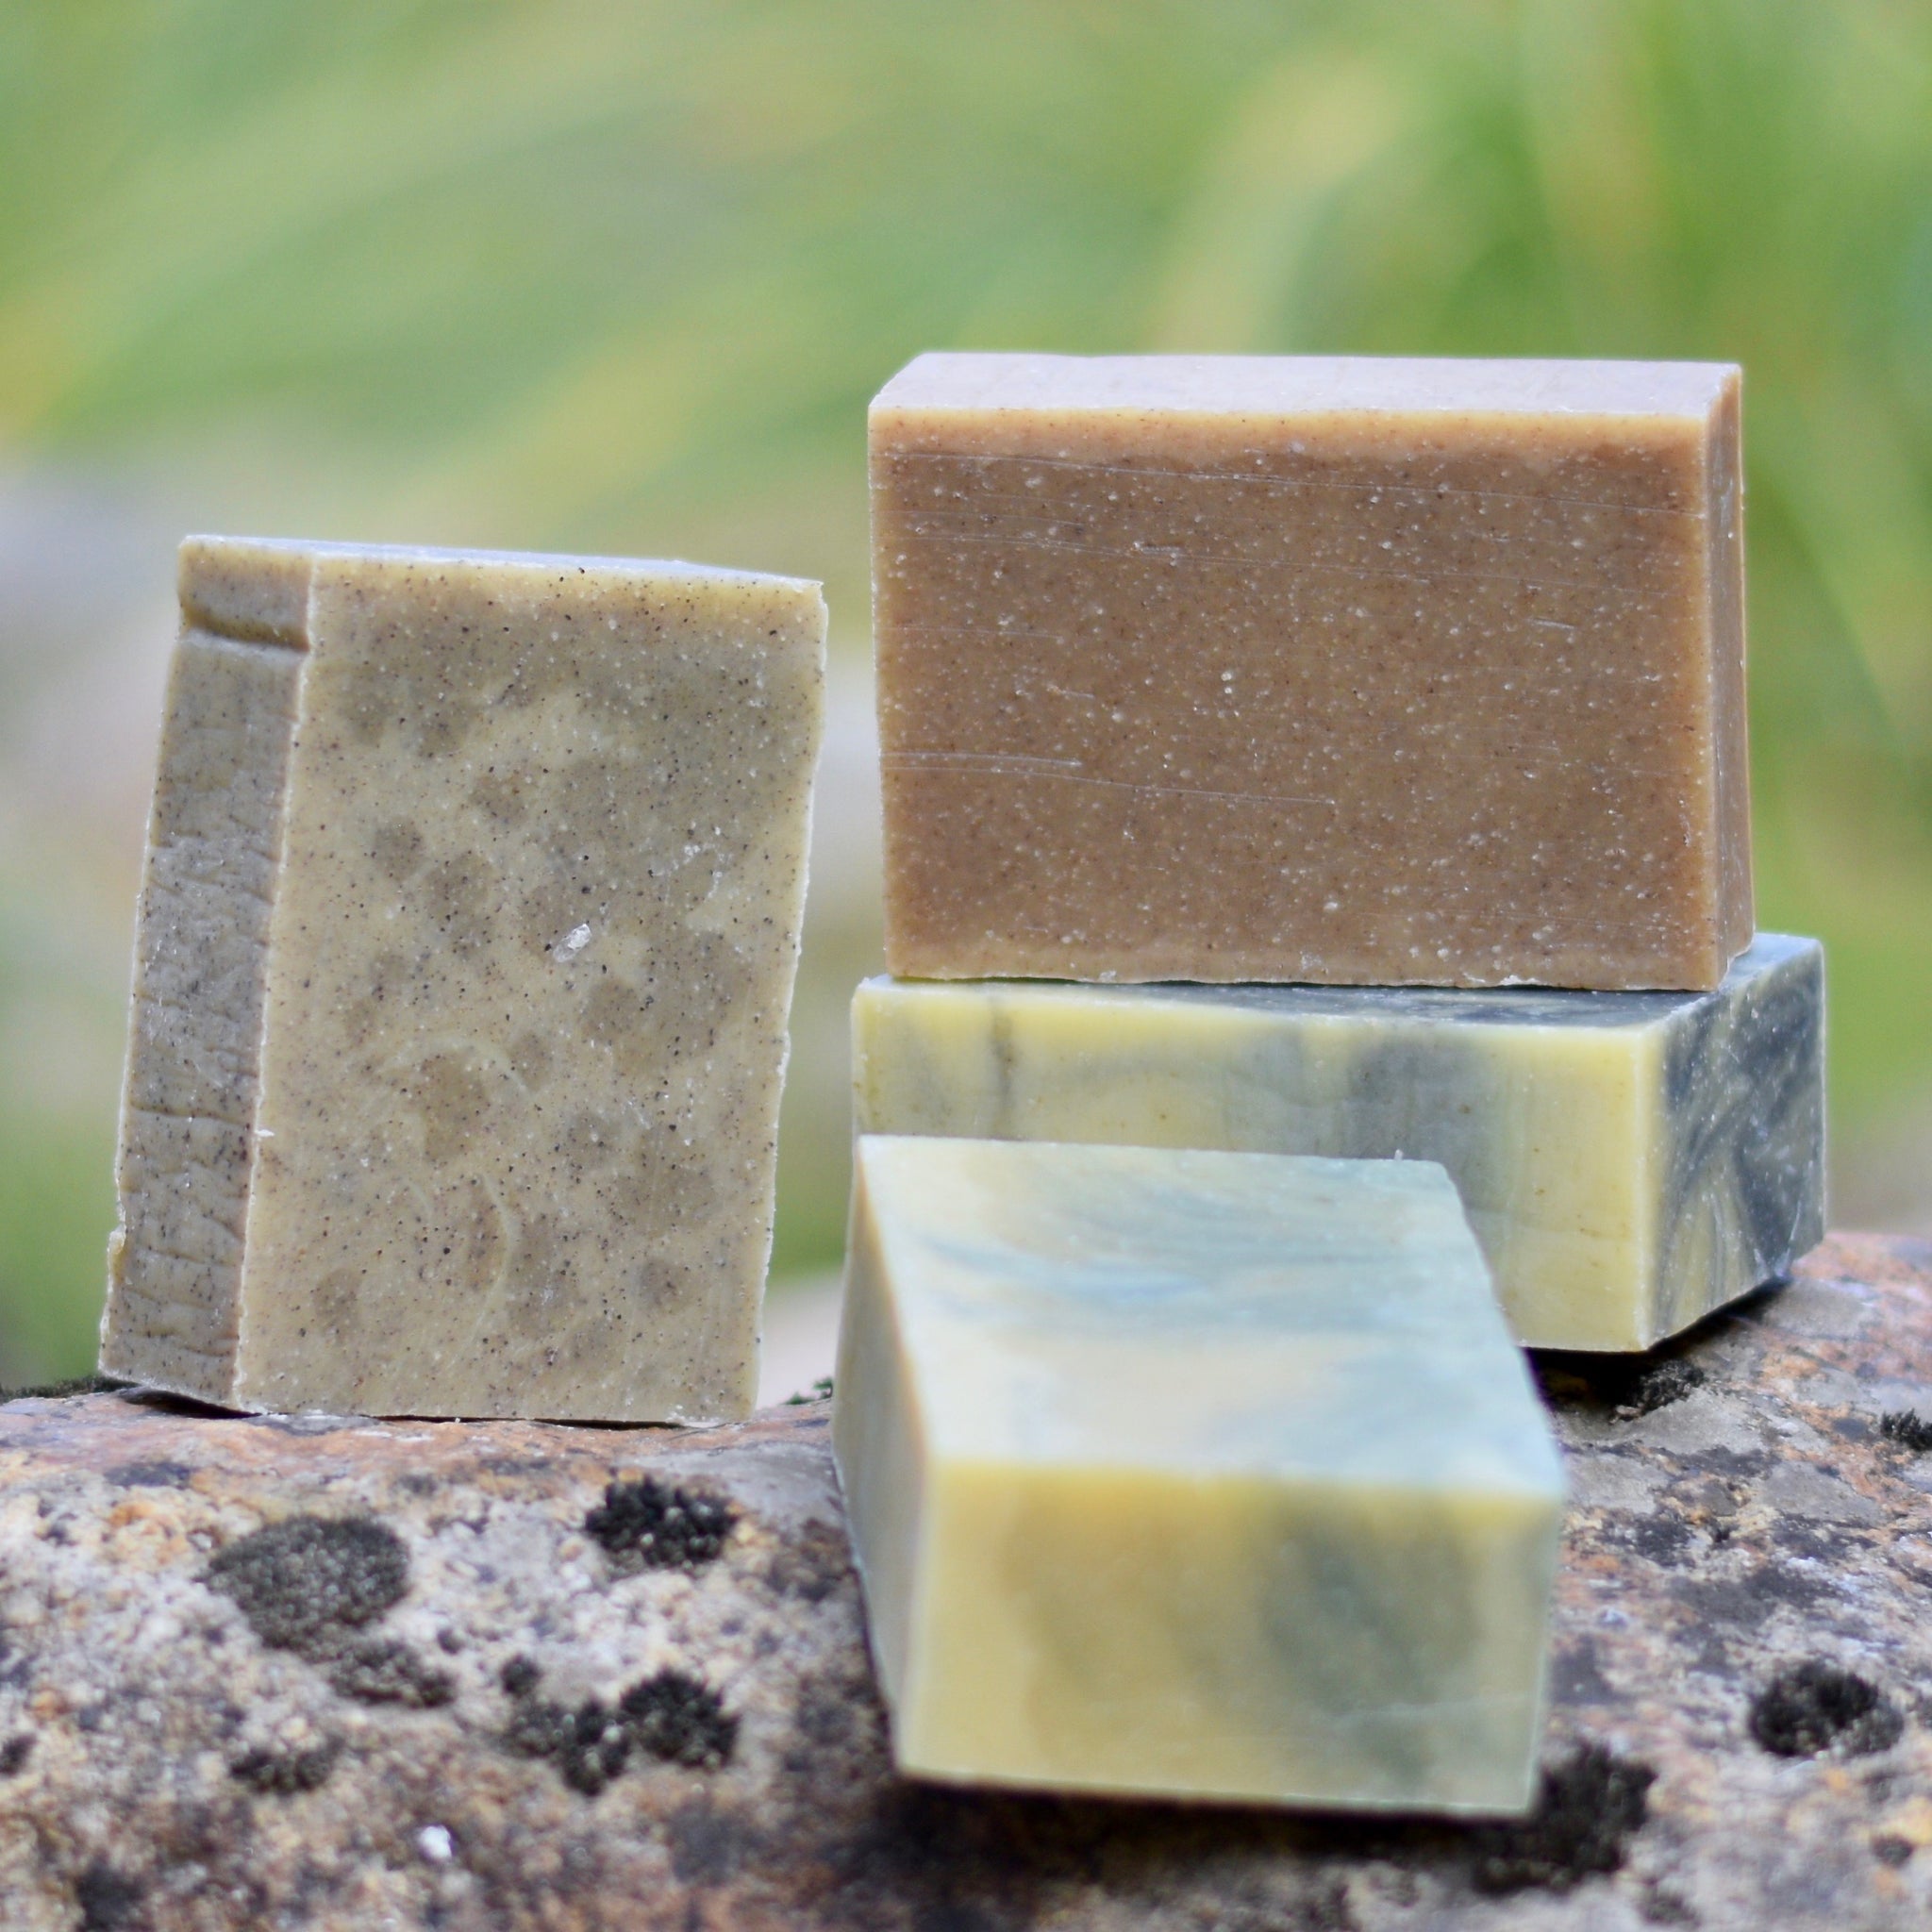 Mountain Man Soap - Premium Qualitity Soap For Men